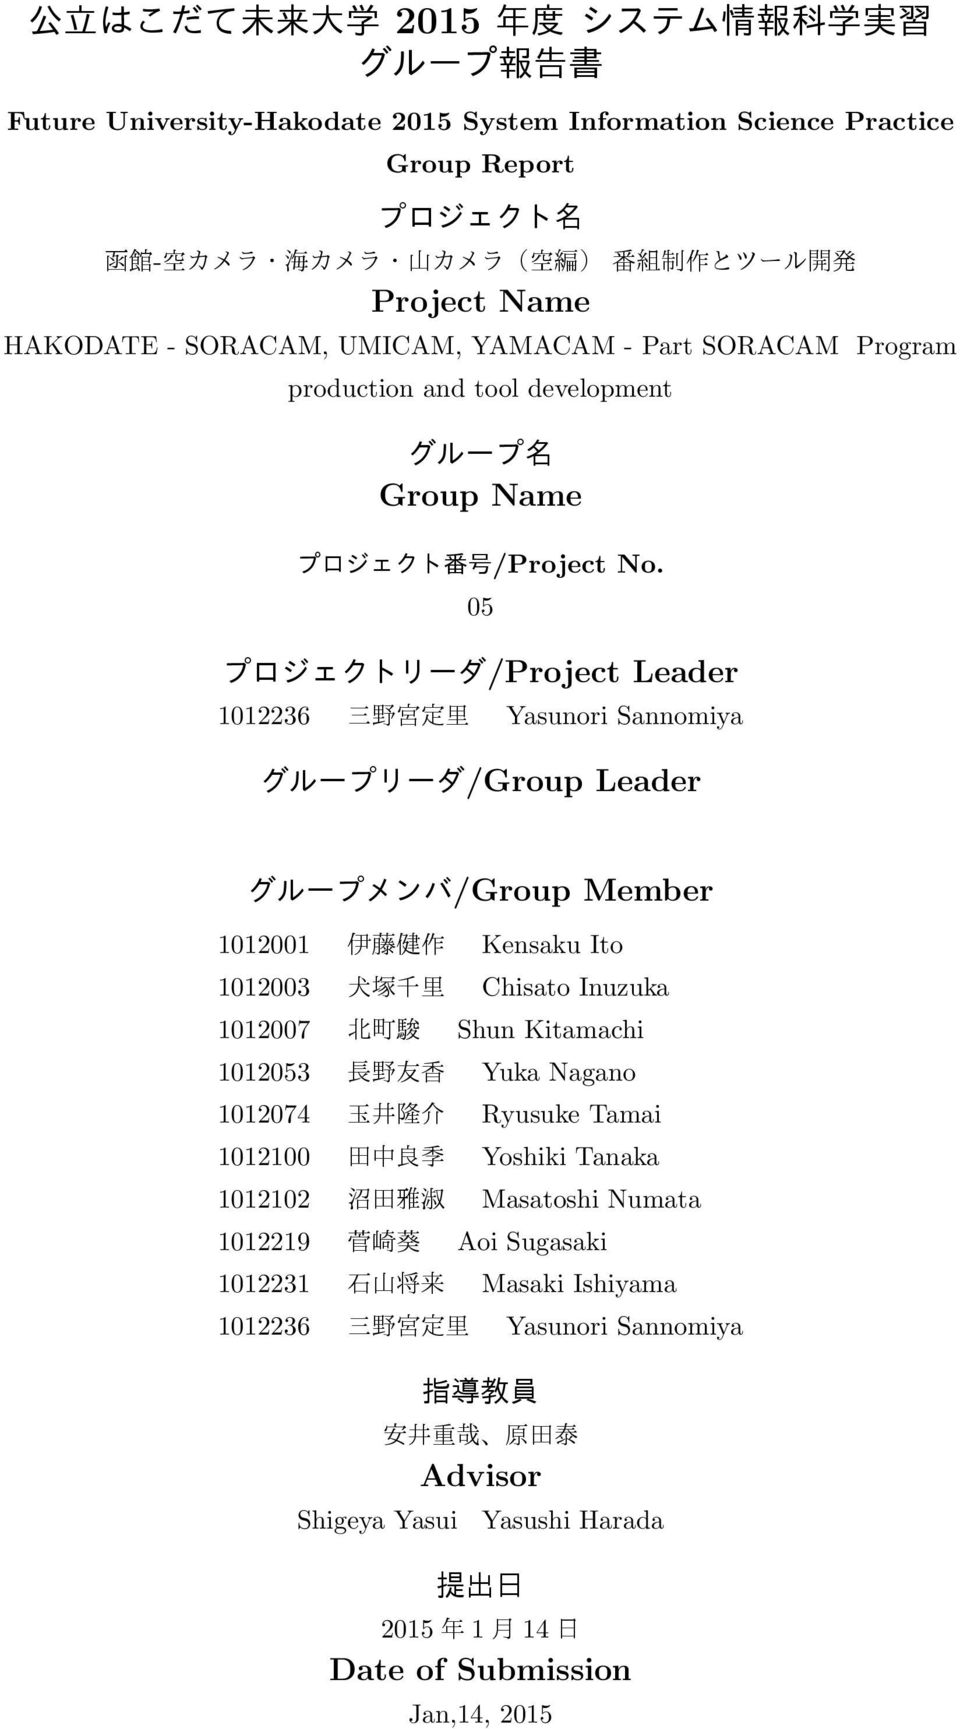 05 /Project Leader 1012236 Yasunori Sannomiya /Group Leader /Group Member 1012001 Kensaku Ito 1012003 Chisato Inuzuka 1012007 Shun Kitamachi 1012053